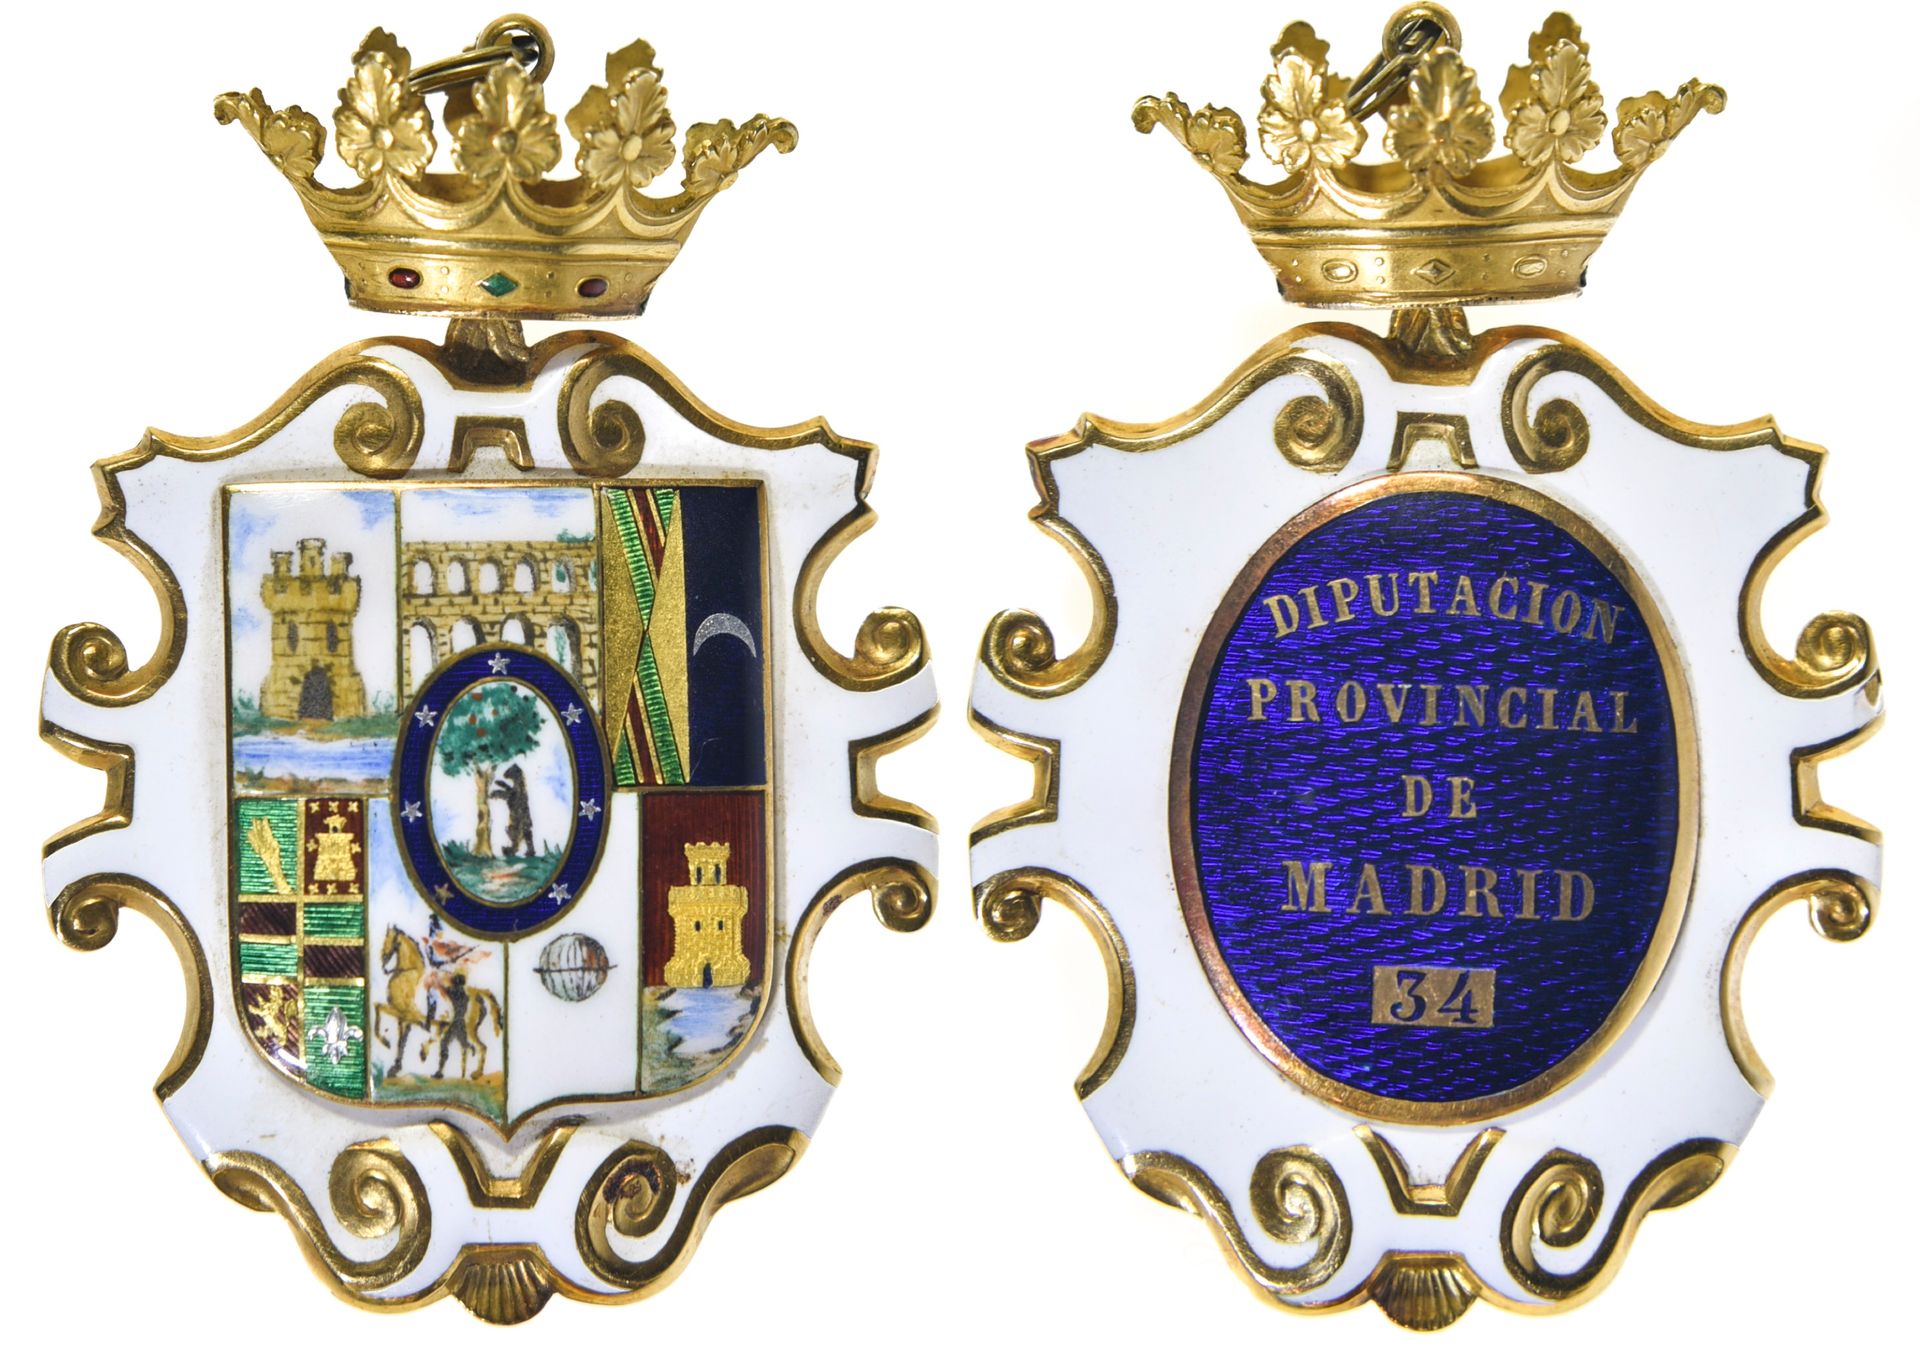 Badge de député provincial, SPANIEN, MADRID

Abzeichen eines stellvertretenden P&hellip;